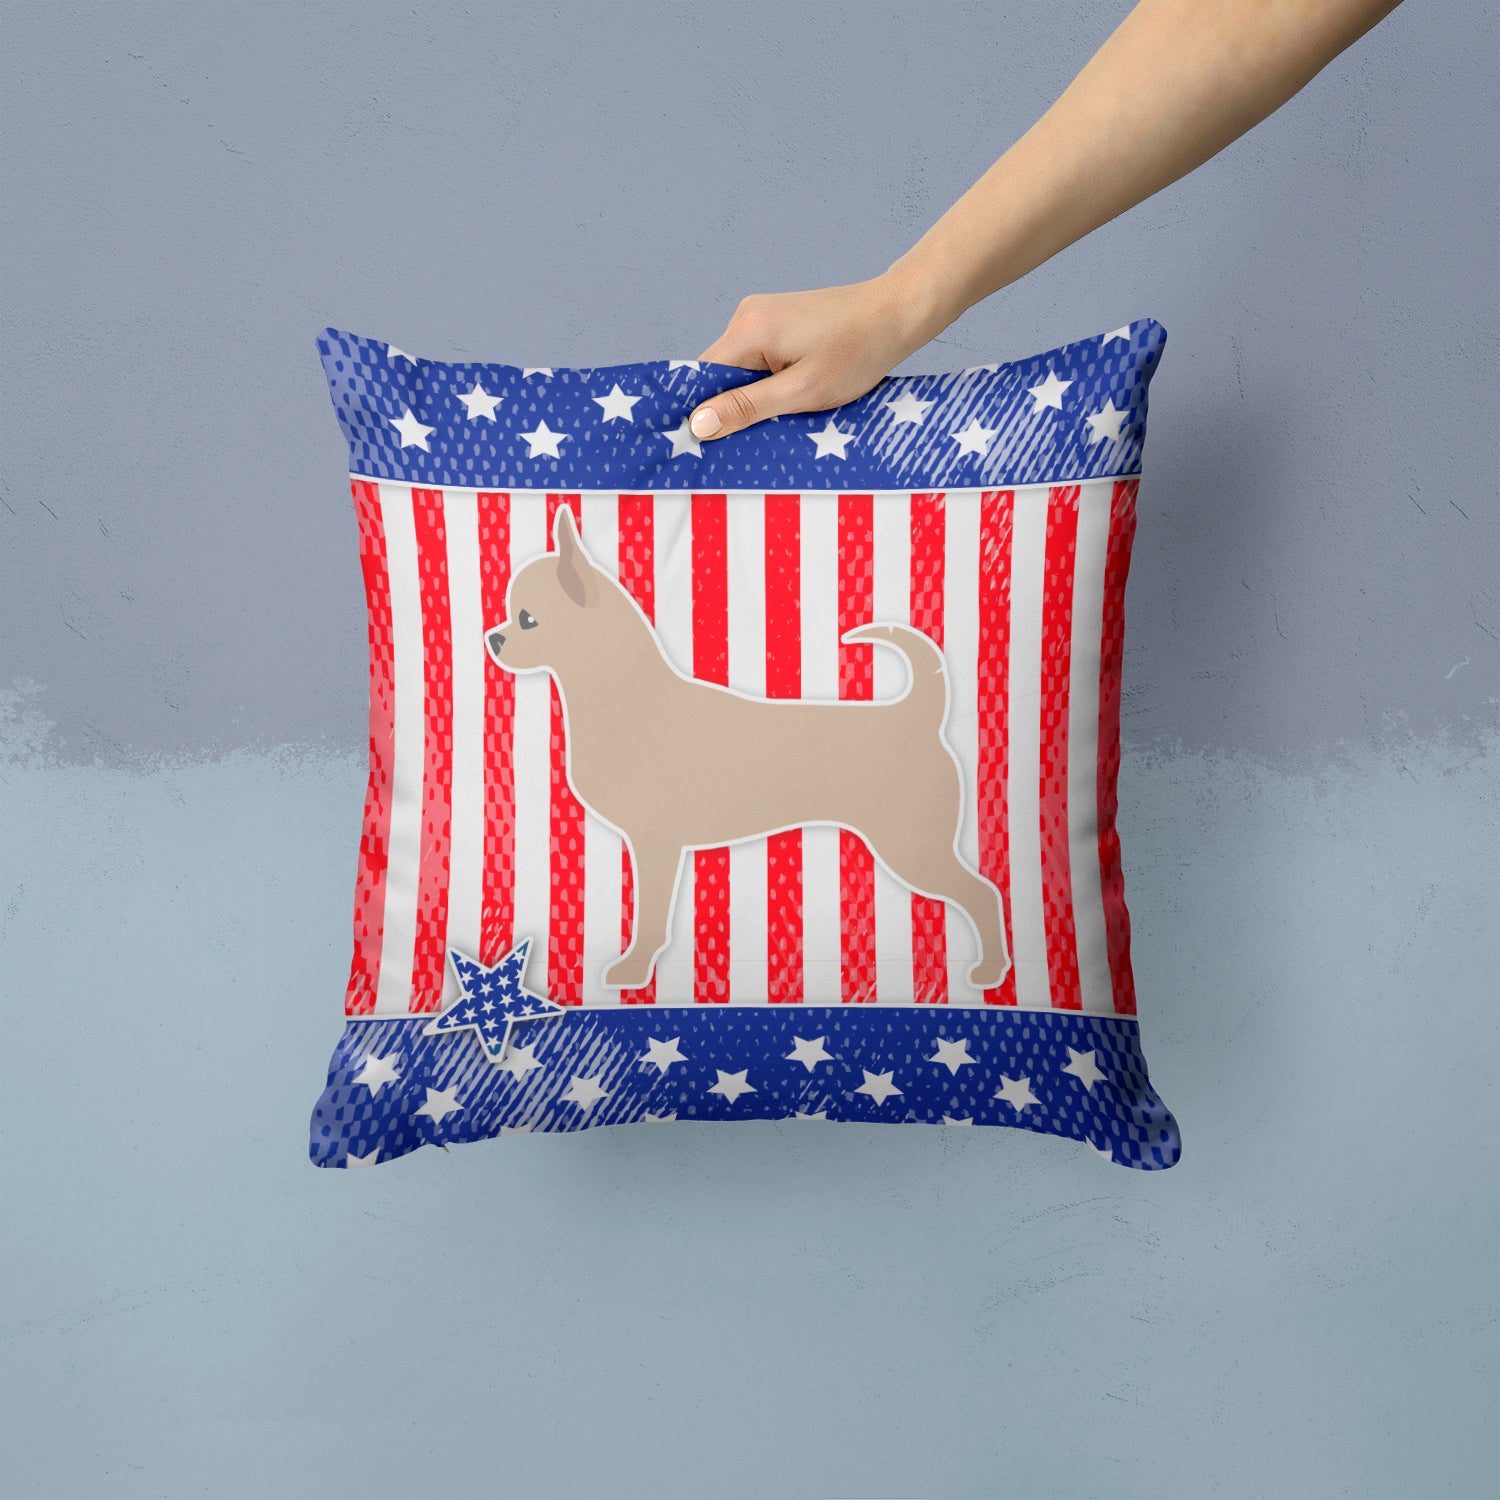 USA Patriotic Chihuahua Fabric Decorative Pillow BB3350PW1414 - the-store.com